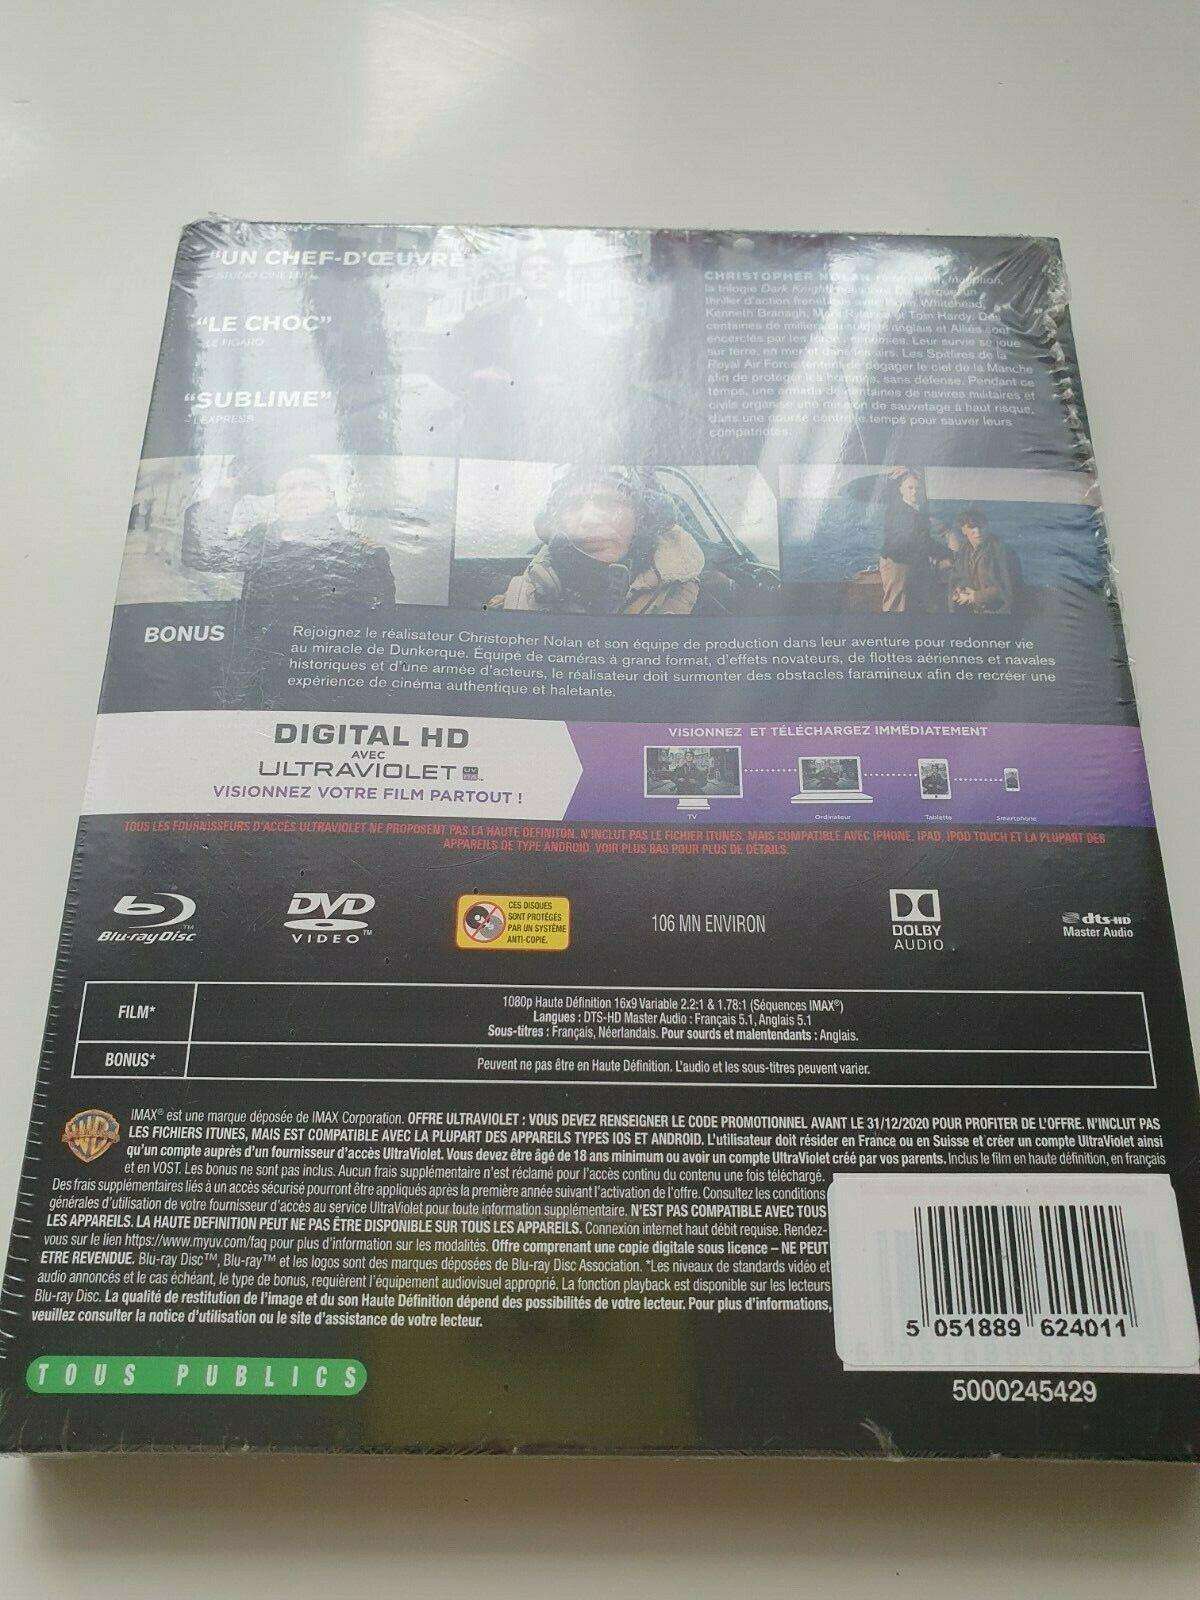 5051889624011 Dunkerque Blu - ray + DVD + Digital HD FR EN Ed. Speciale NEUF SOUS BLISTER